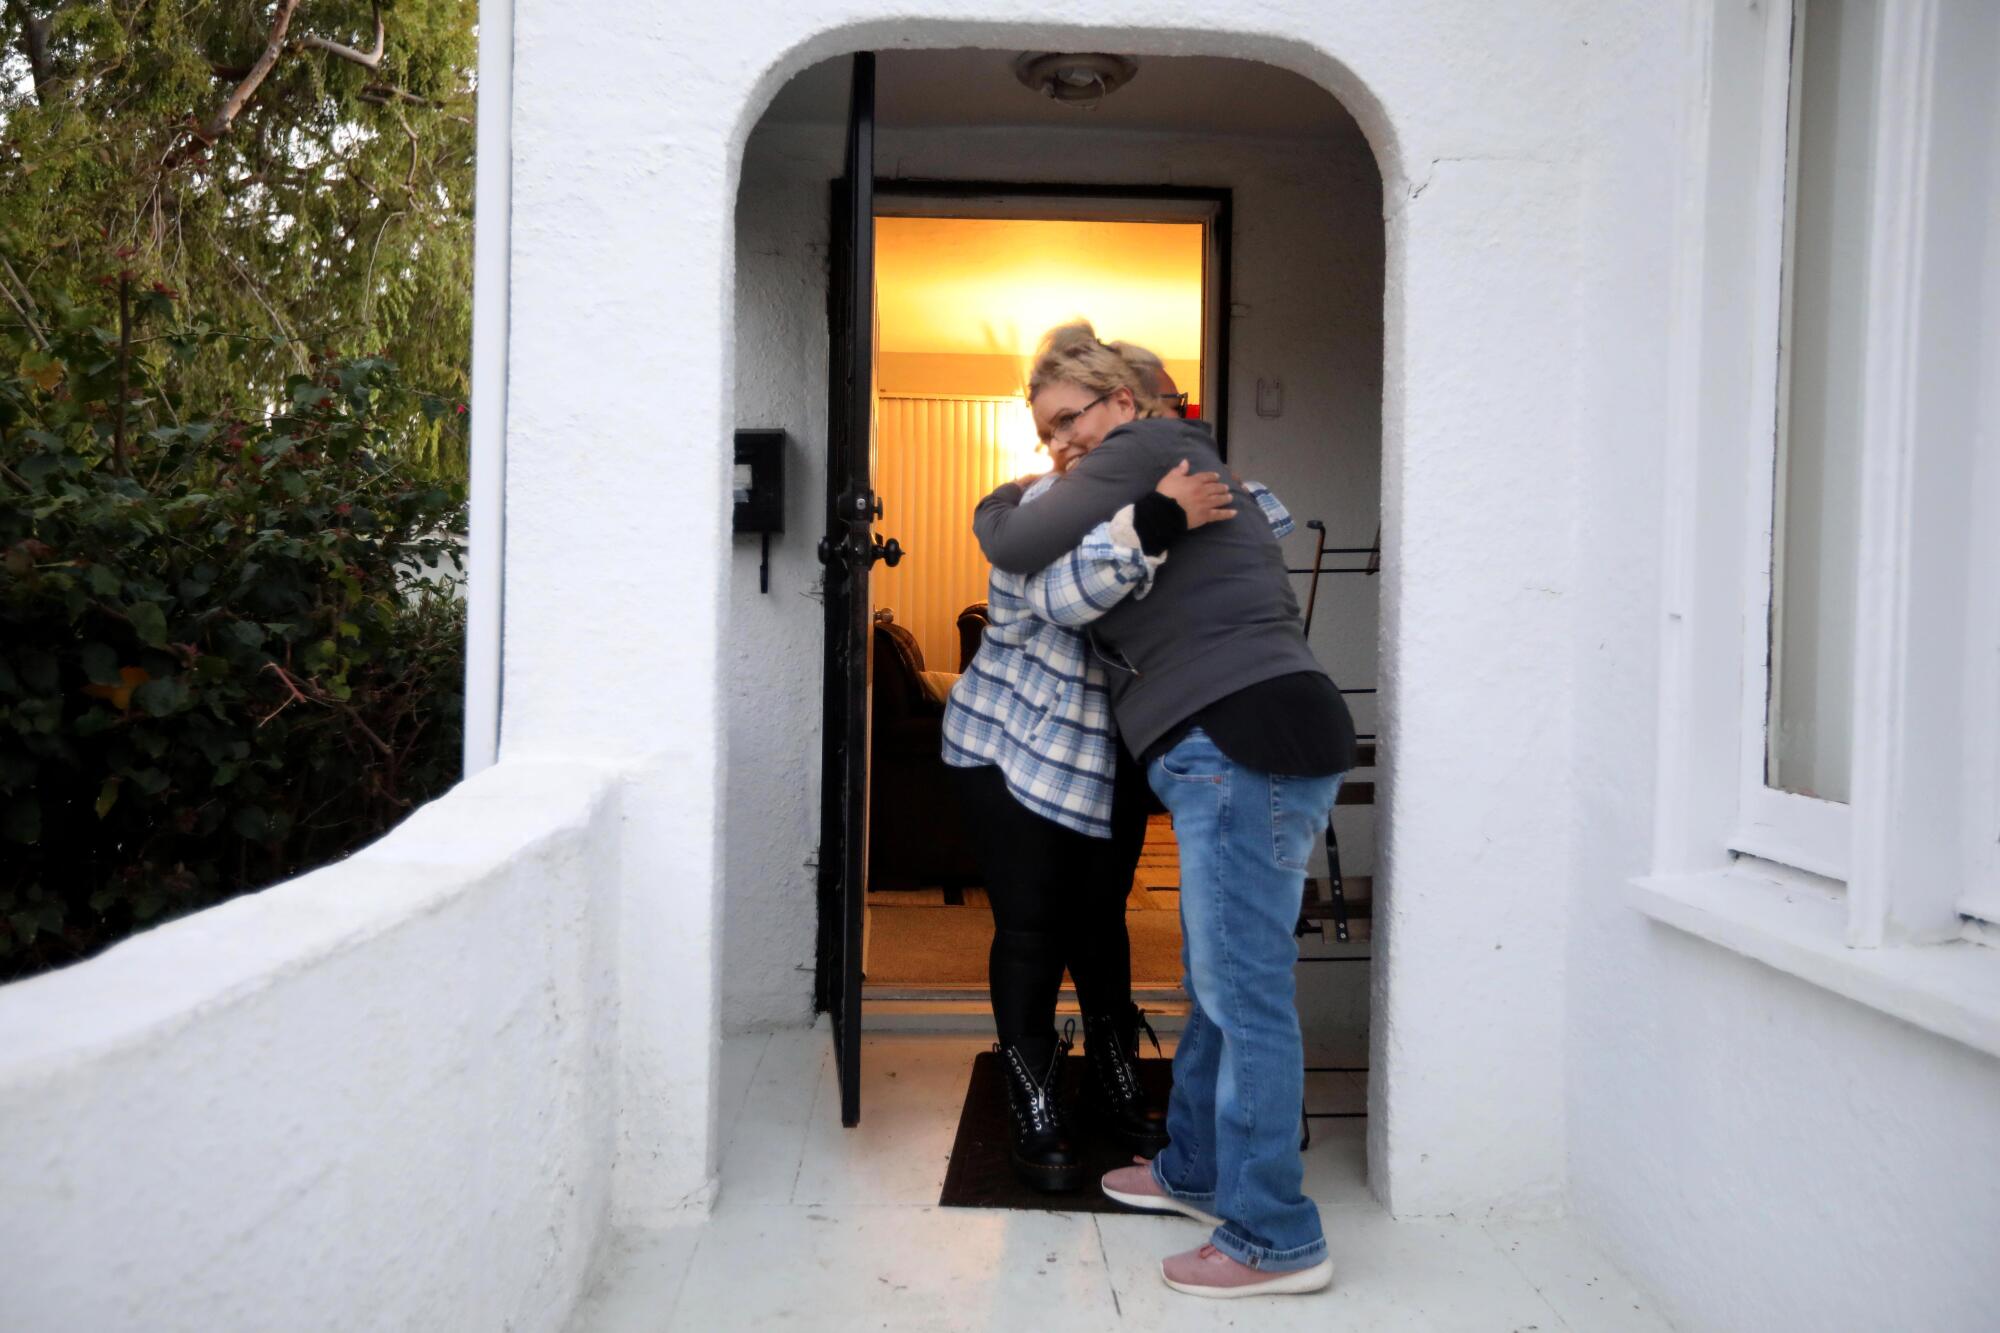  Two women hug outside a home in El Sereno.